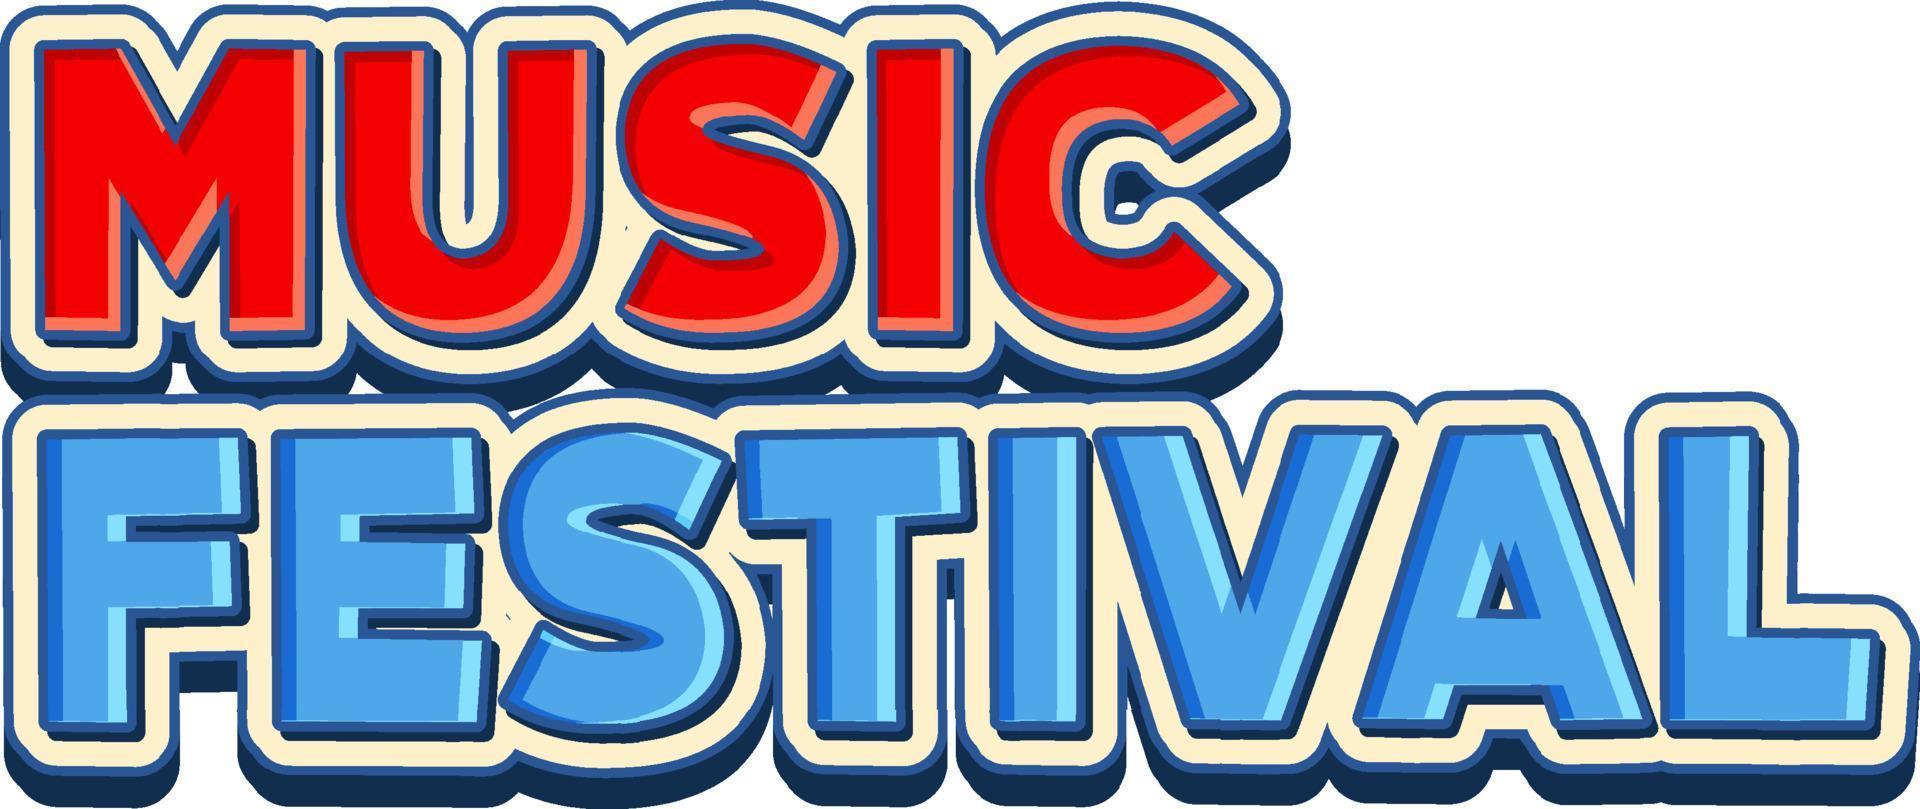 Music festival text for poster or banner design vector